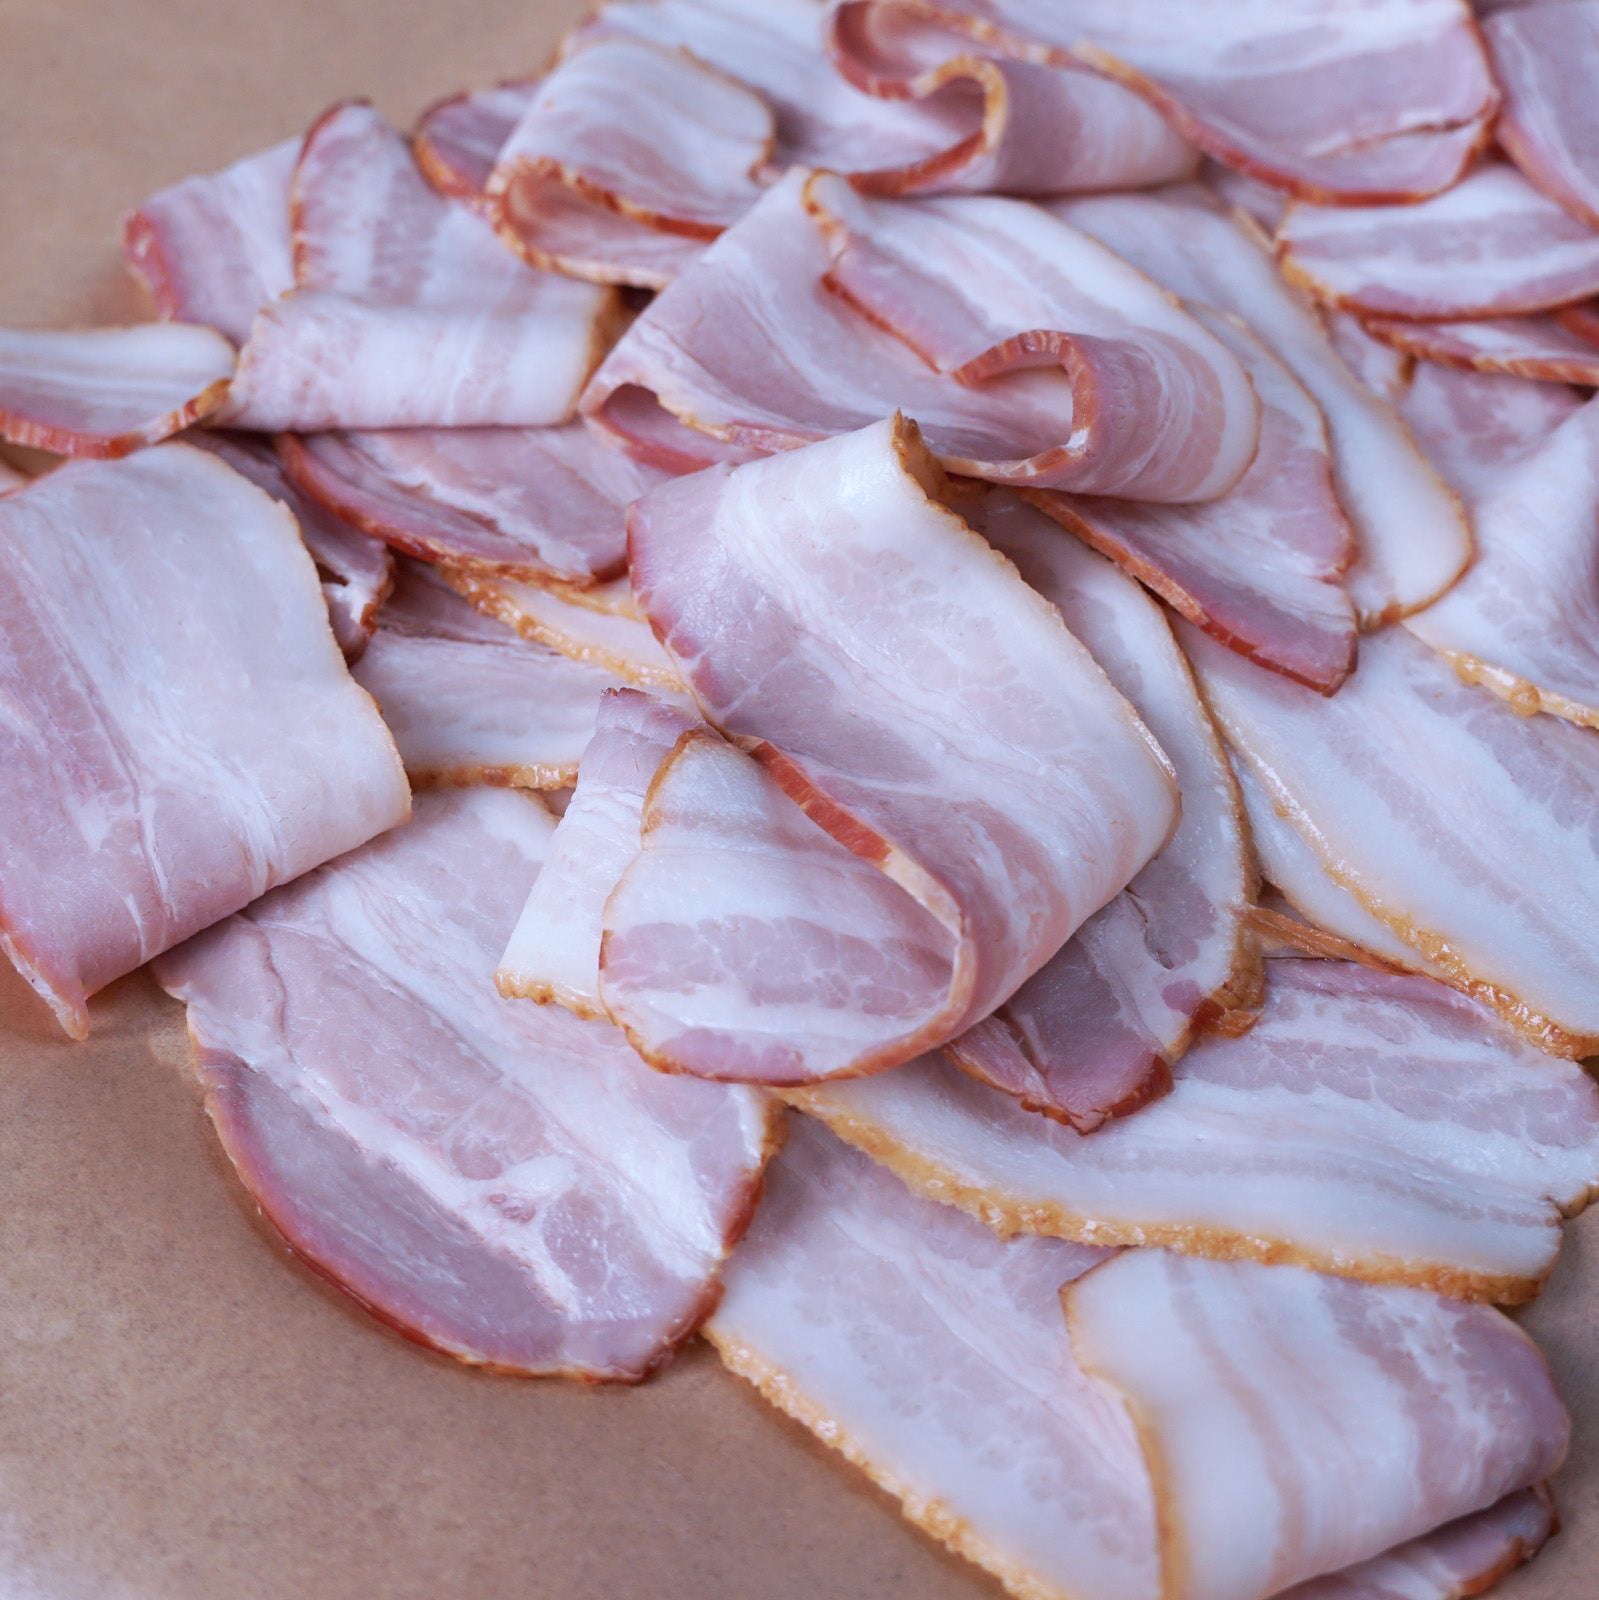 All-Natural Lightly Seasoned Smoked Free-Range Pork Bacon Slices (200g) - Horizon Farms